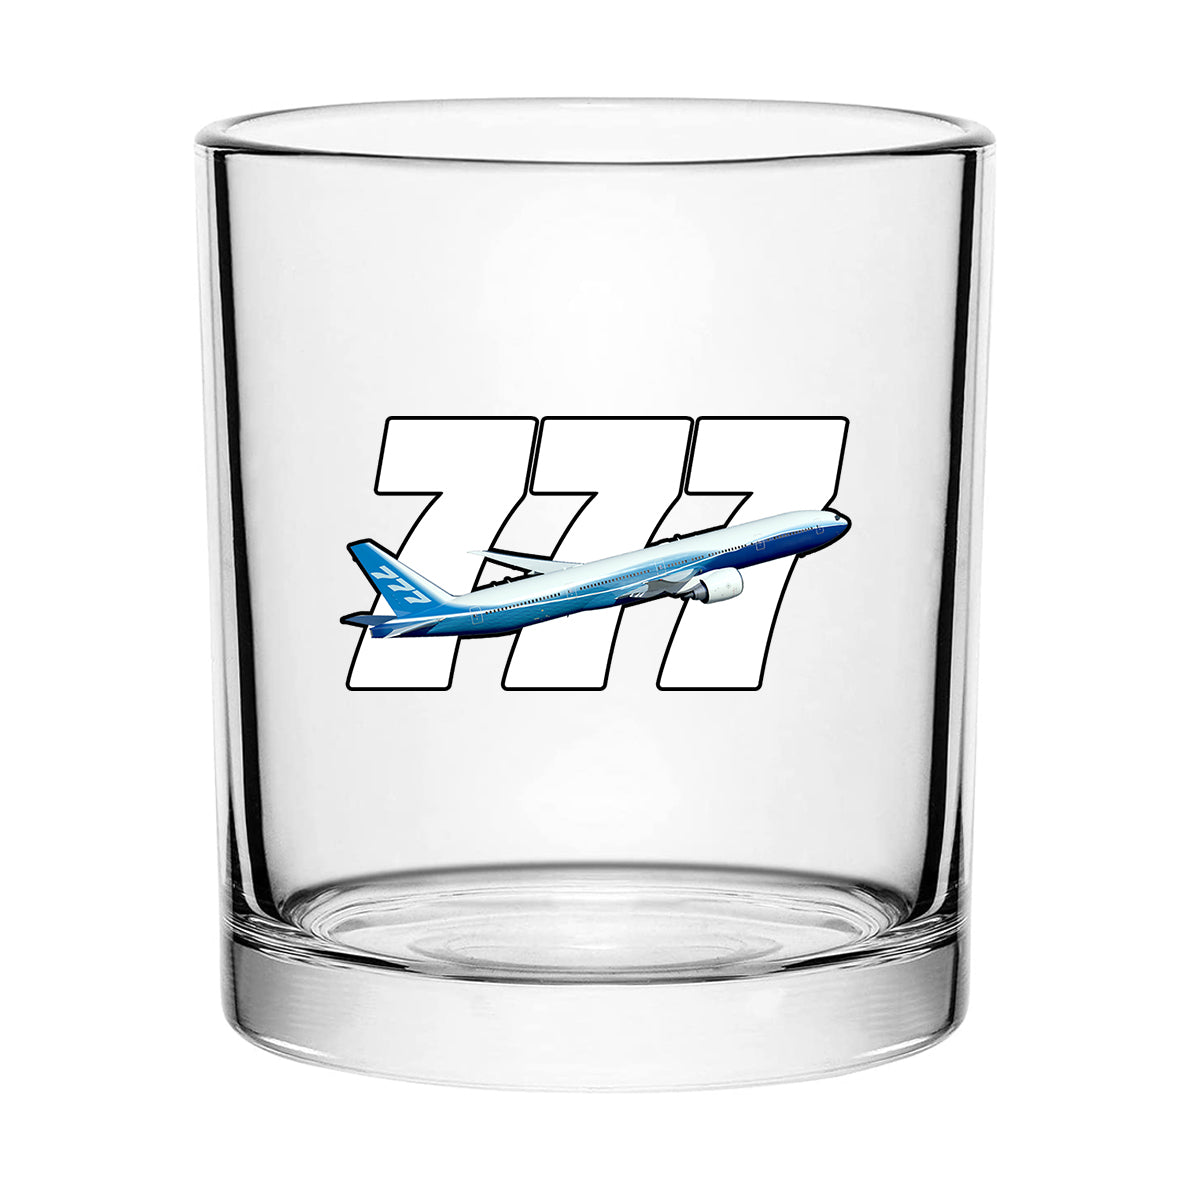 Super Boeing 777 Designed Special Whiskey Glasses